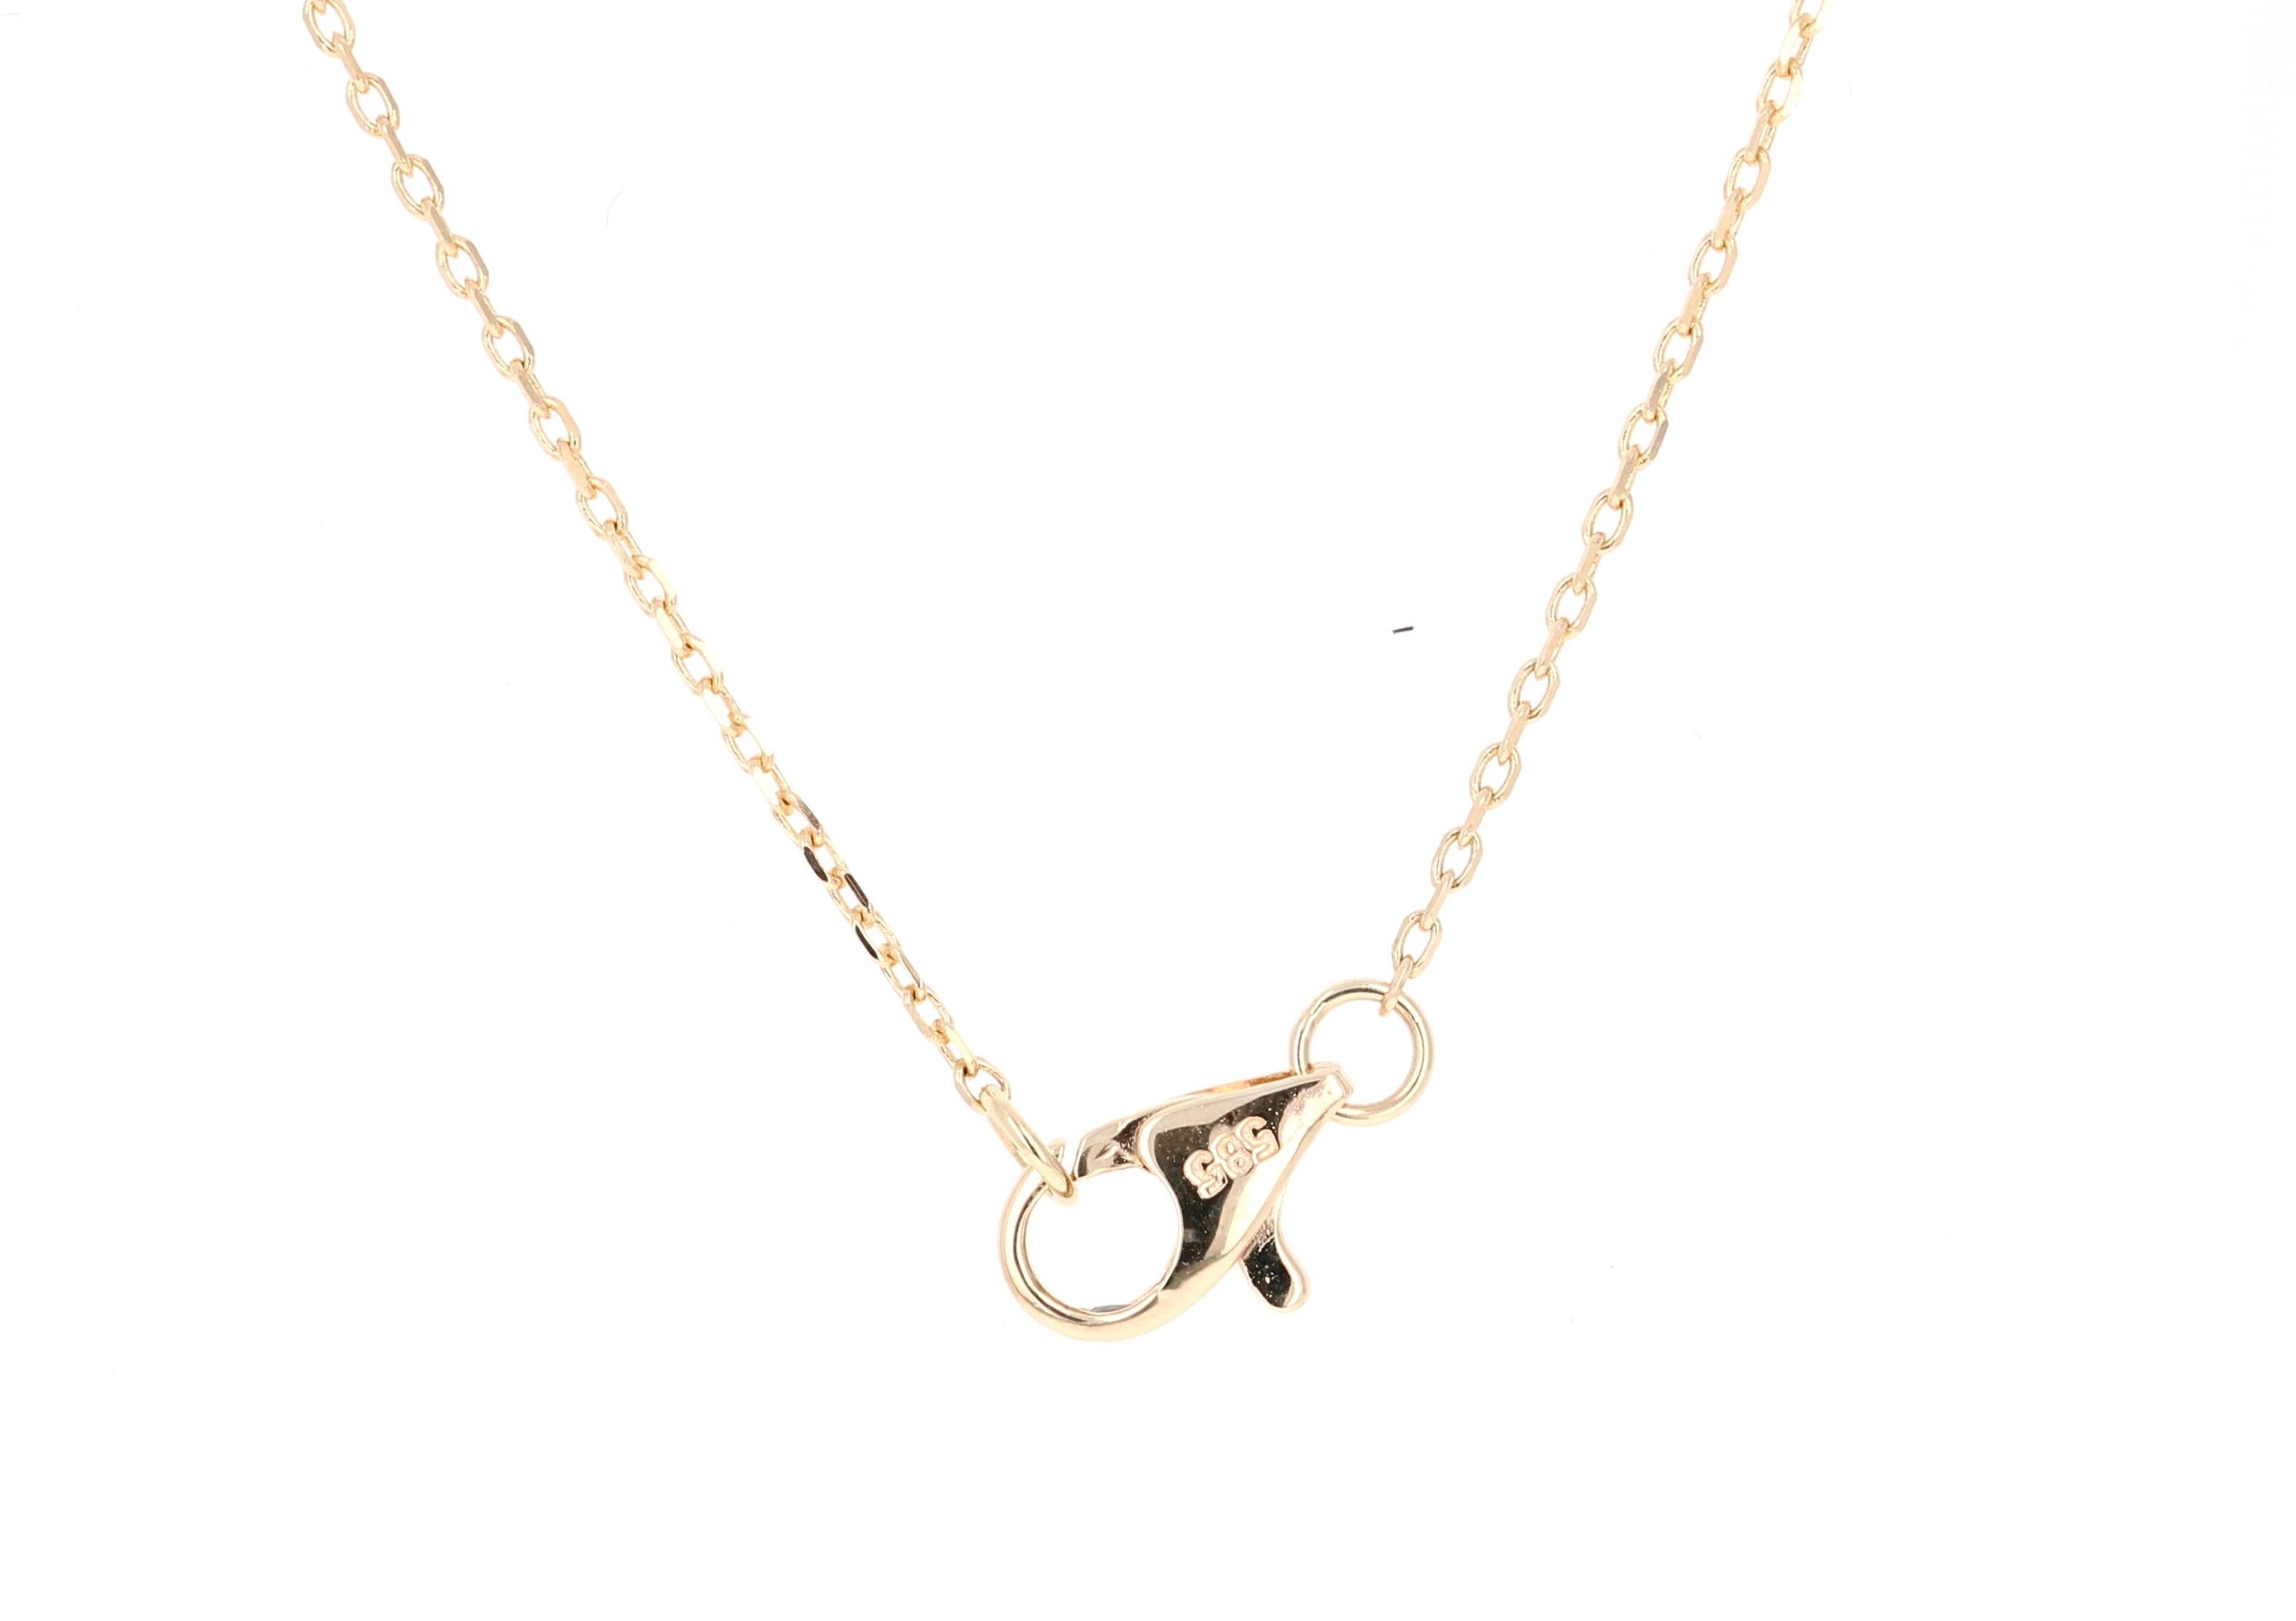 Contemporary 0.51 Carat Diamond Pendant with Chain Necklace 14 Karat Yellow Gold